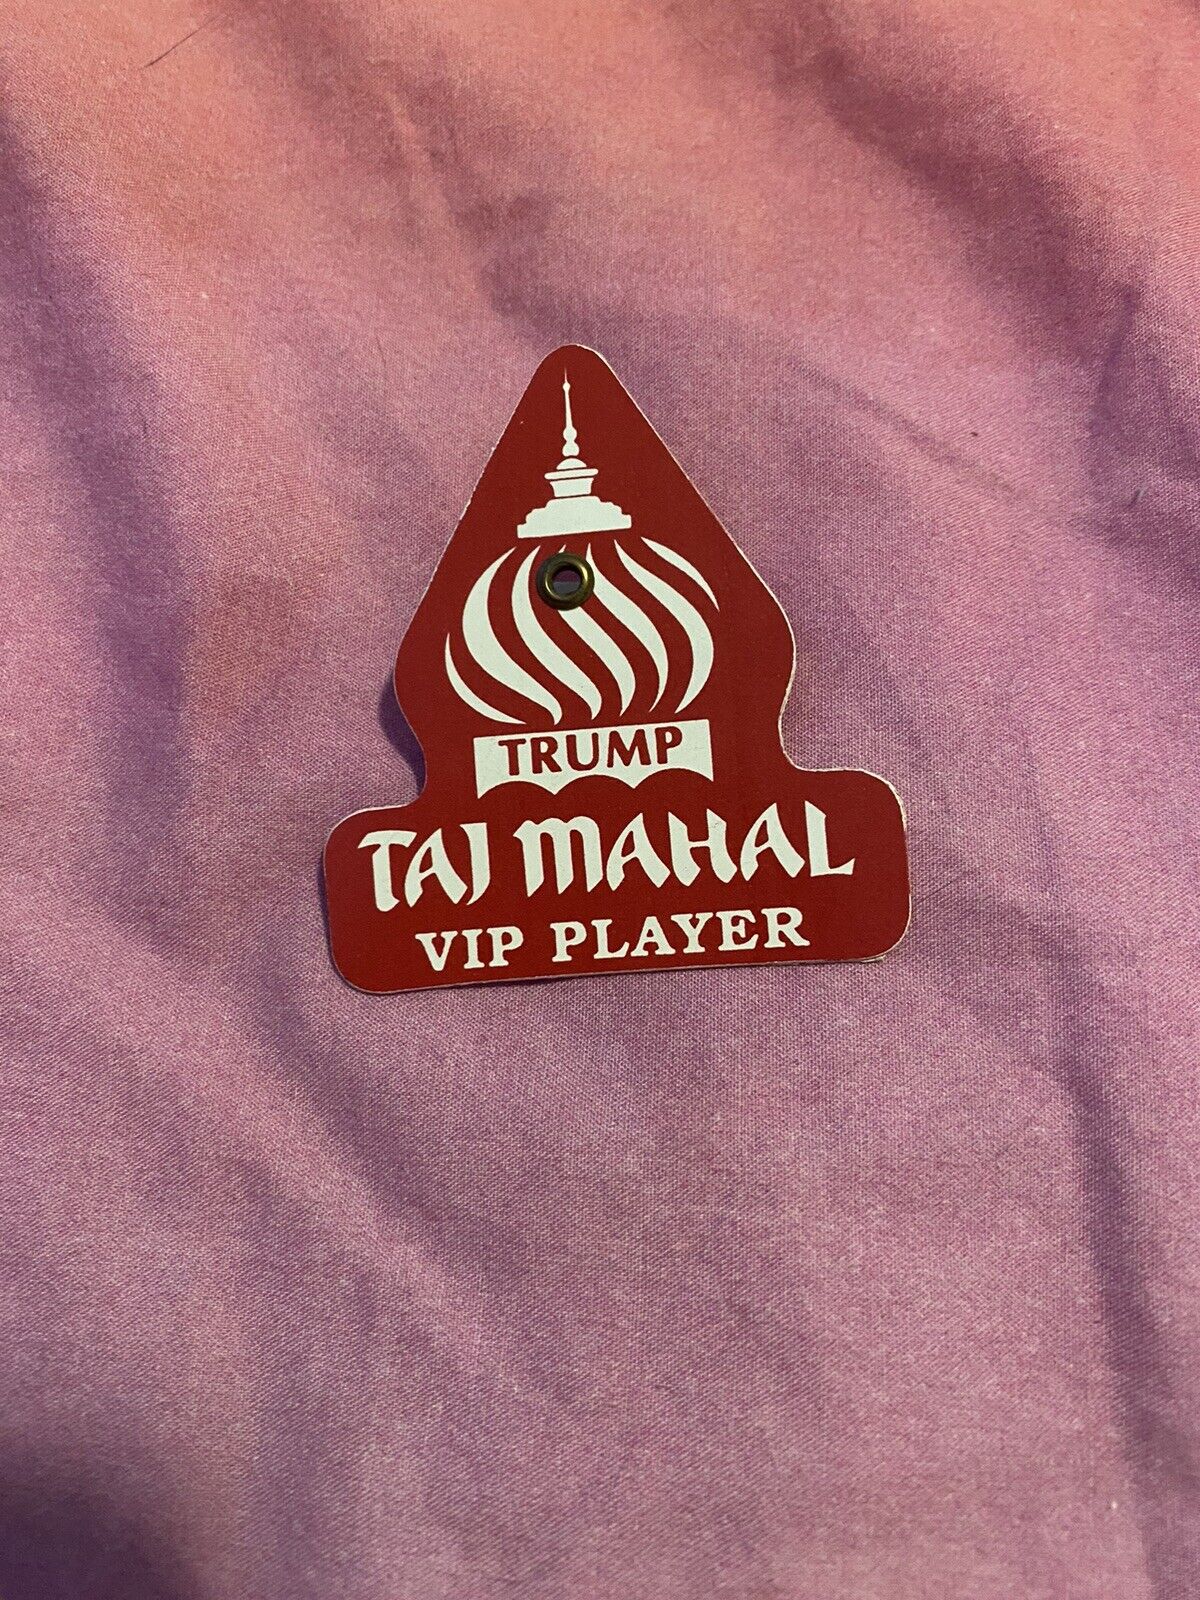 Vintage Trump Taj Mahal VIP Player Badge